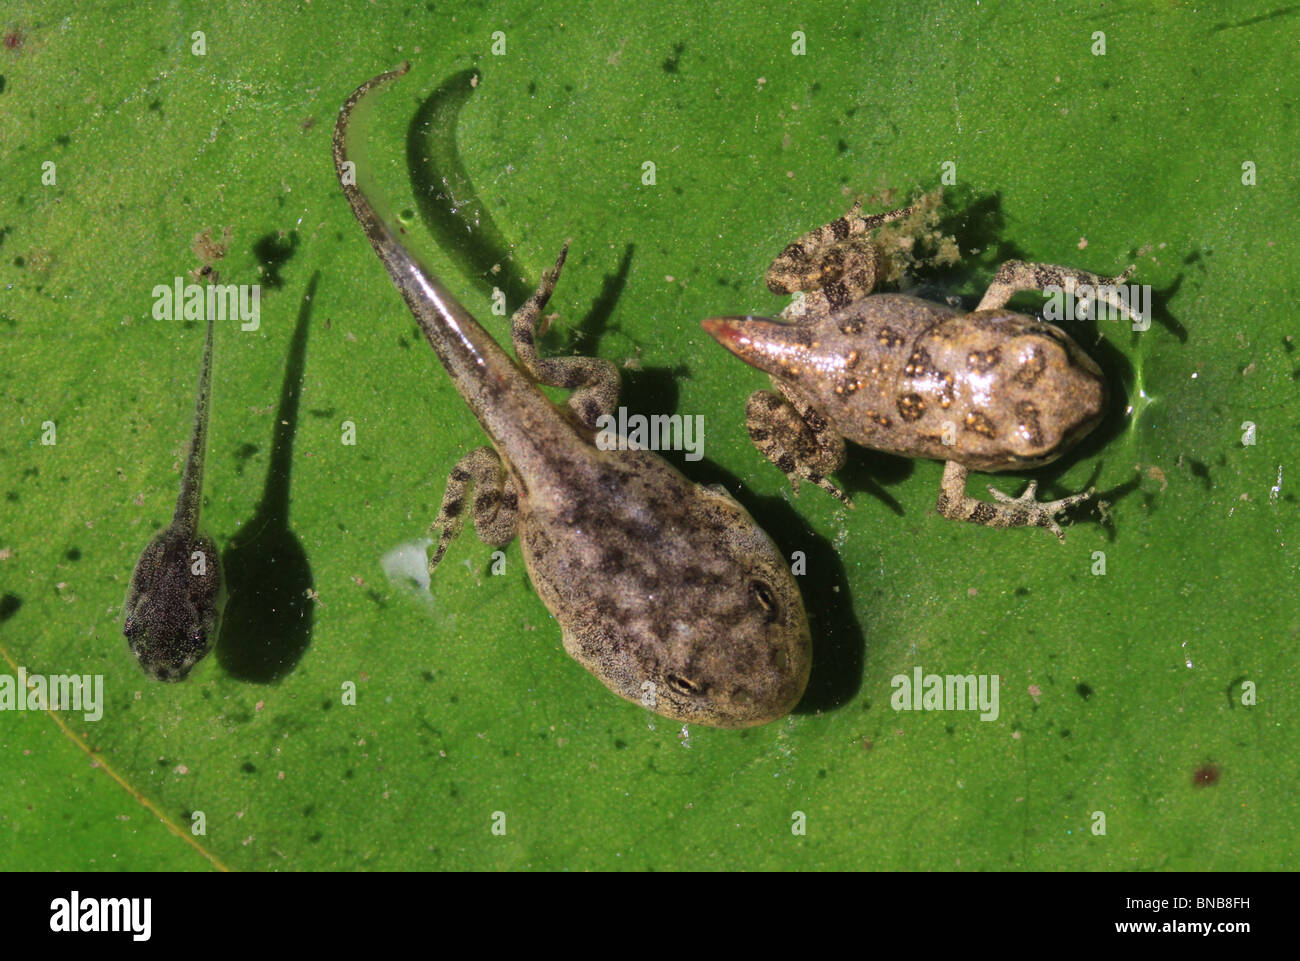 tadpole to frog development different species Stock Photo